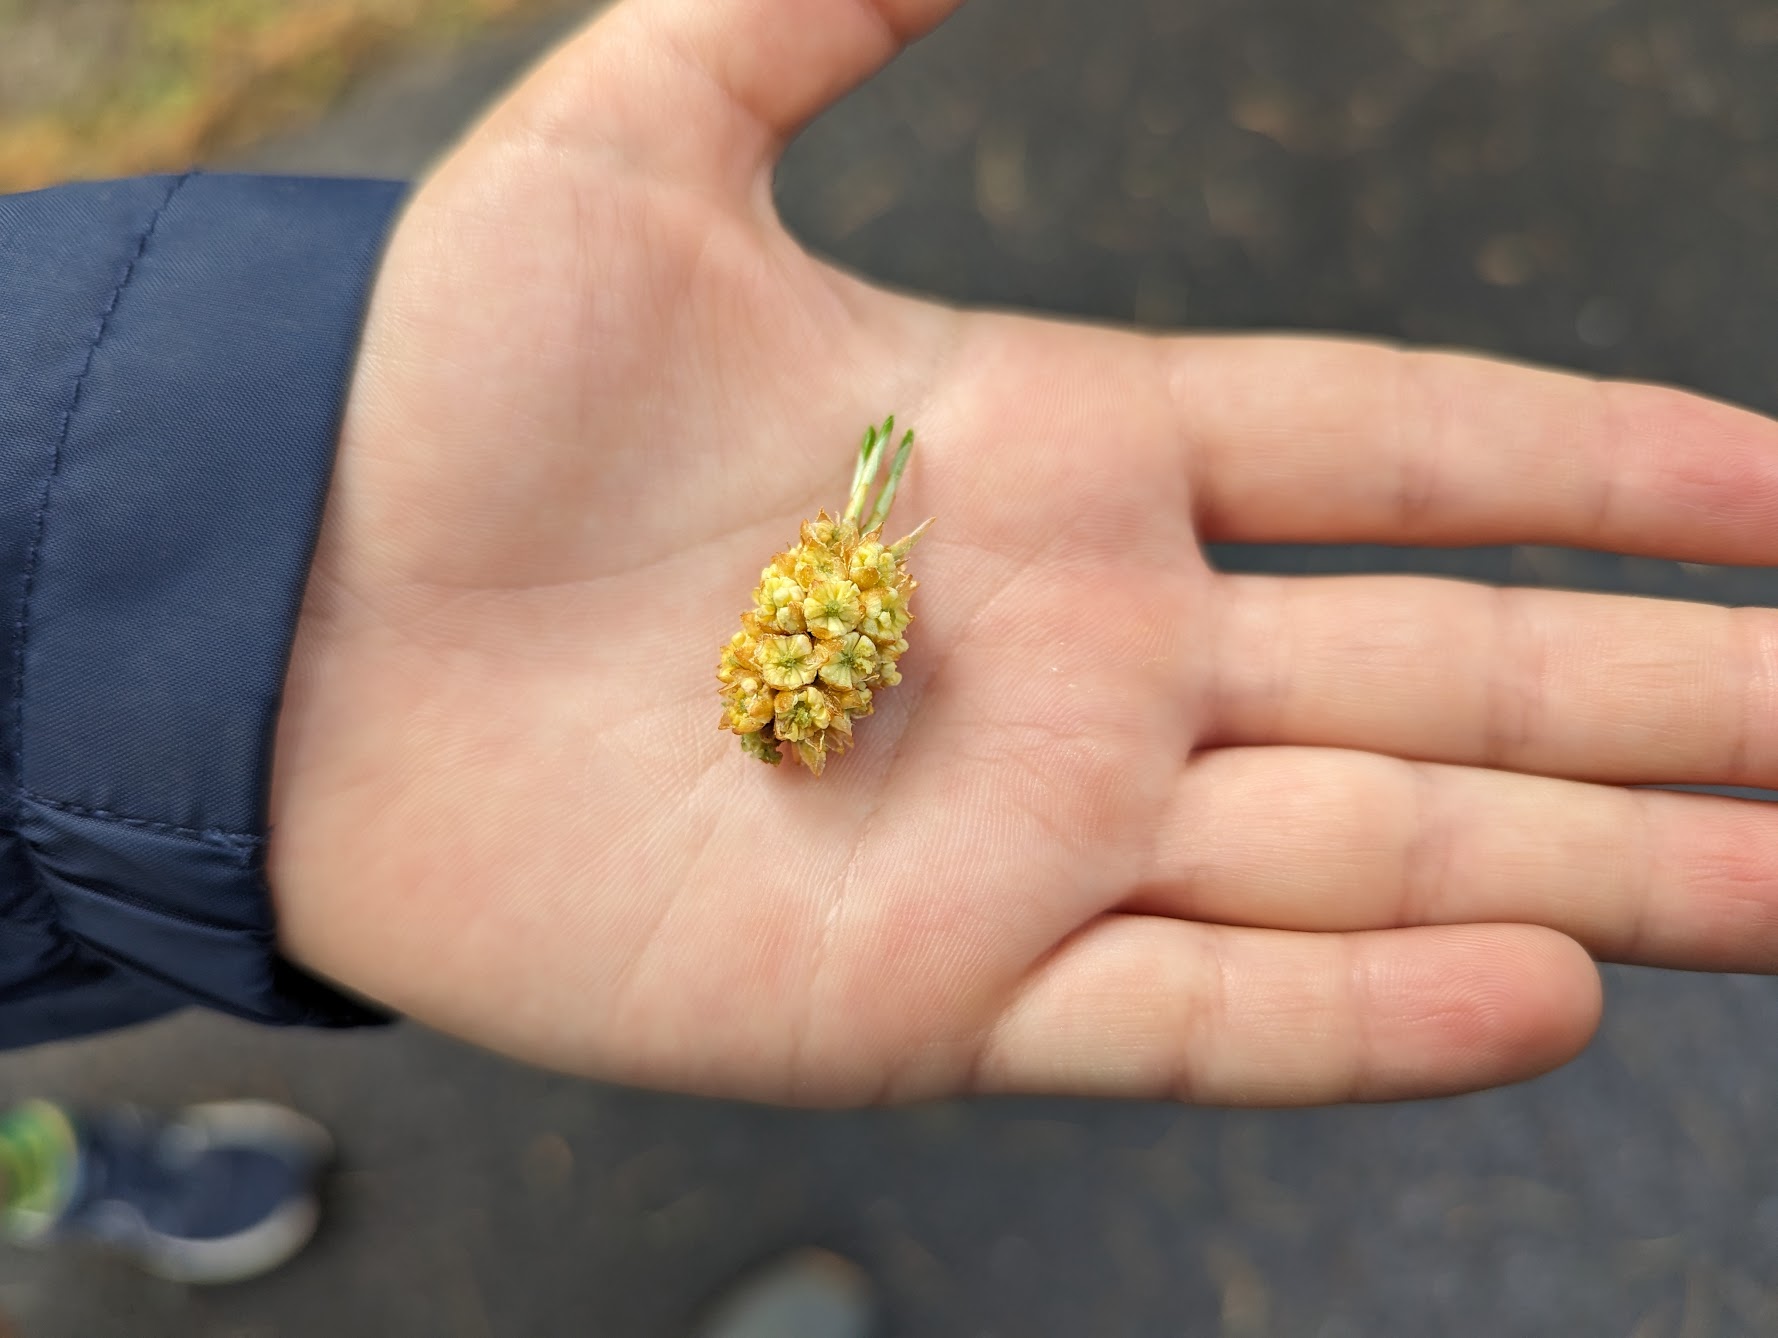 World’s smallest pineapple?